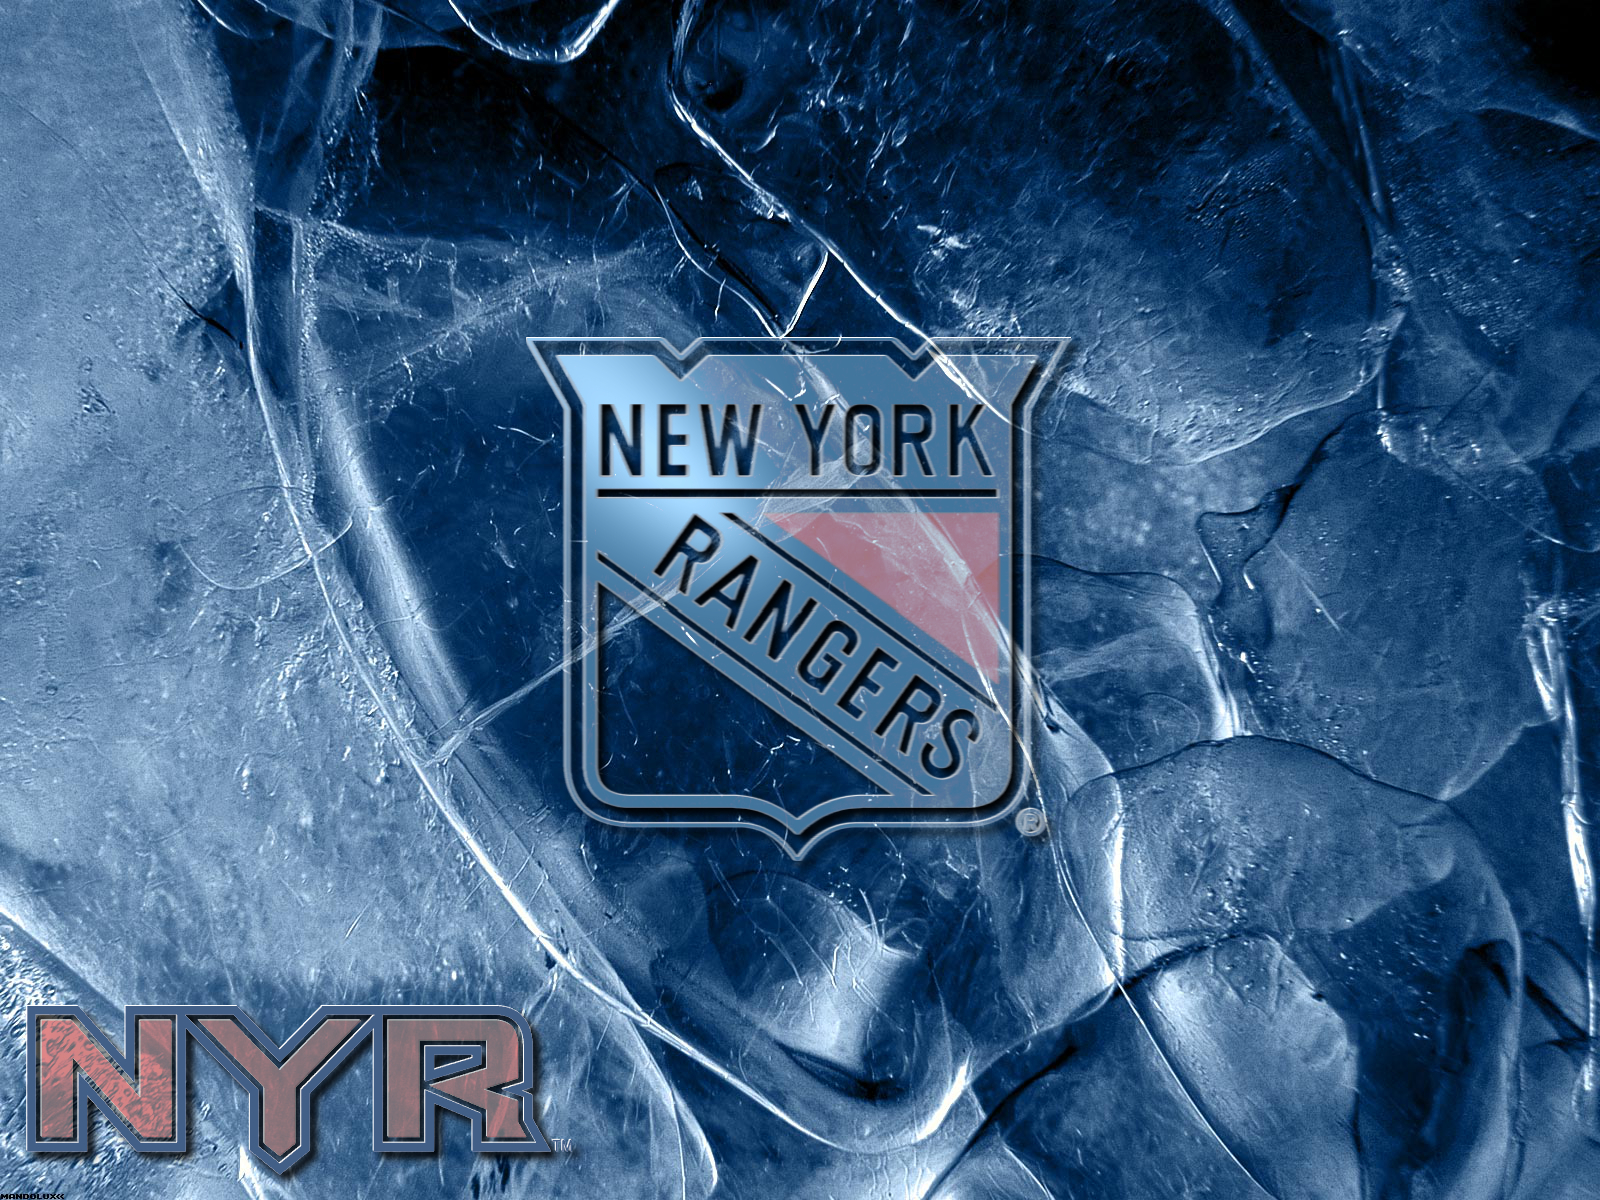 new york rangers 20 download free